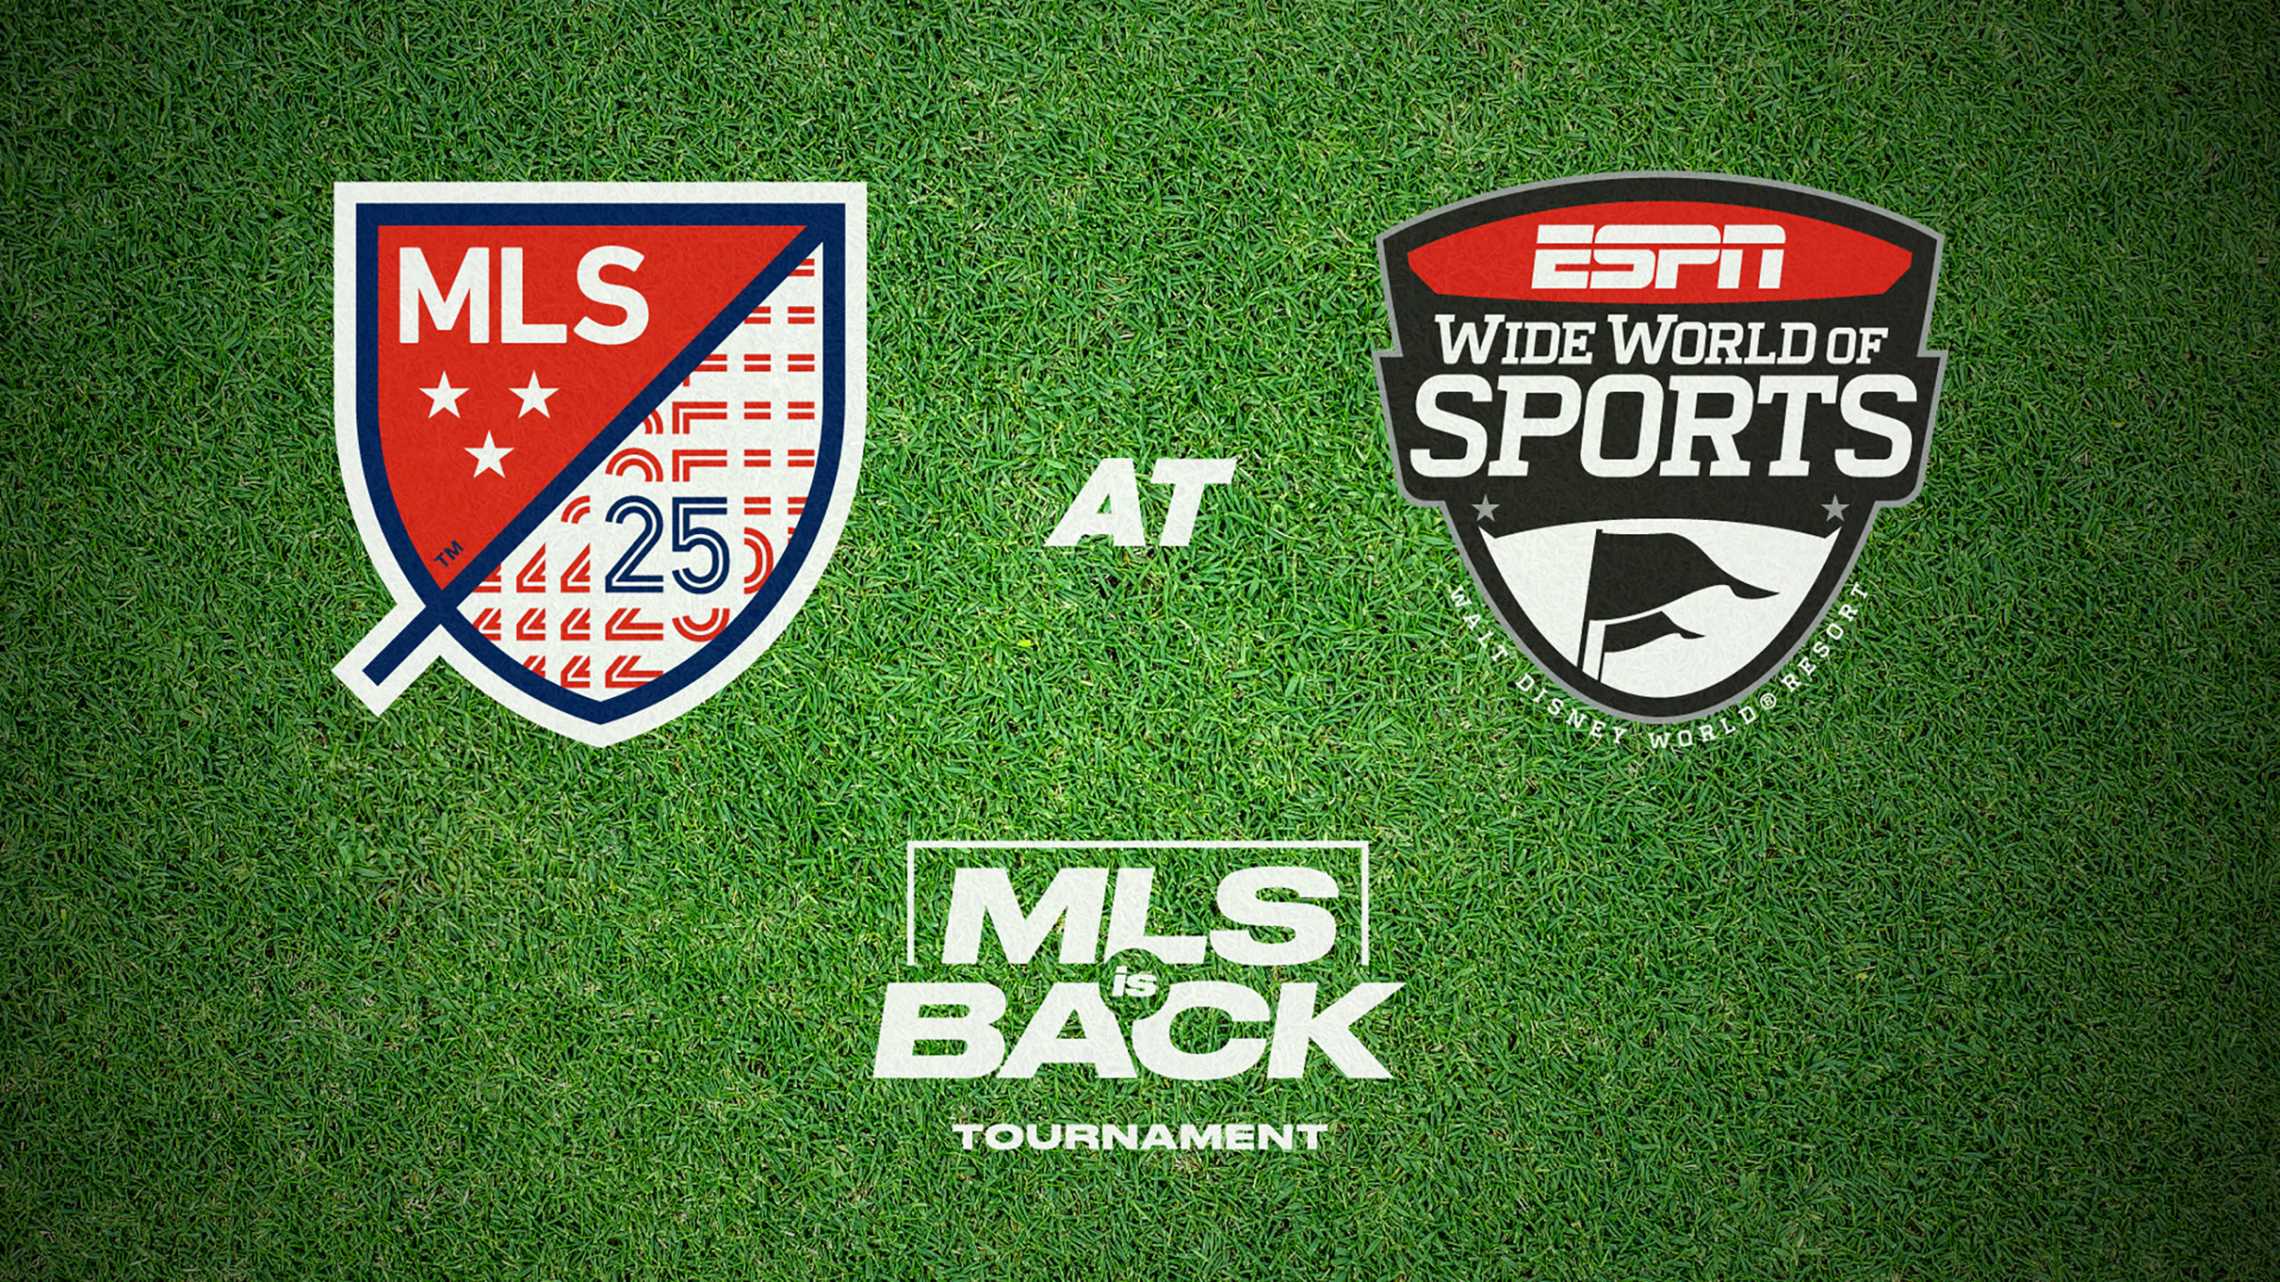 MLS is Back - ESPN WWOS